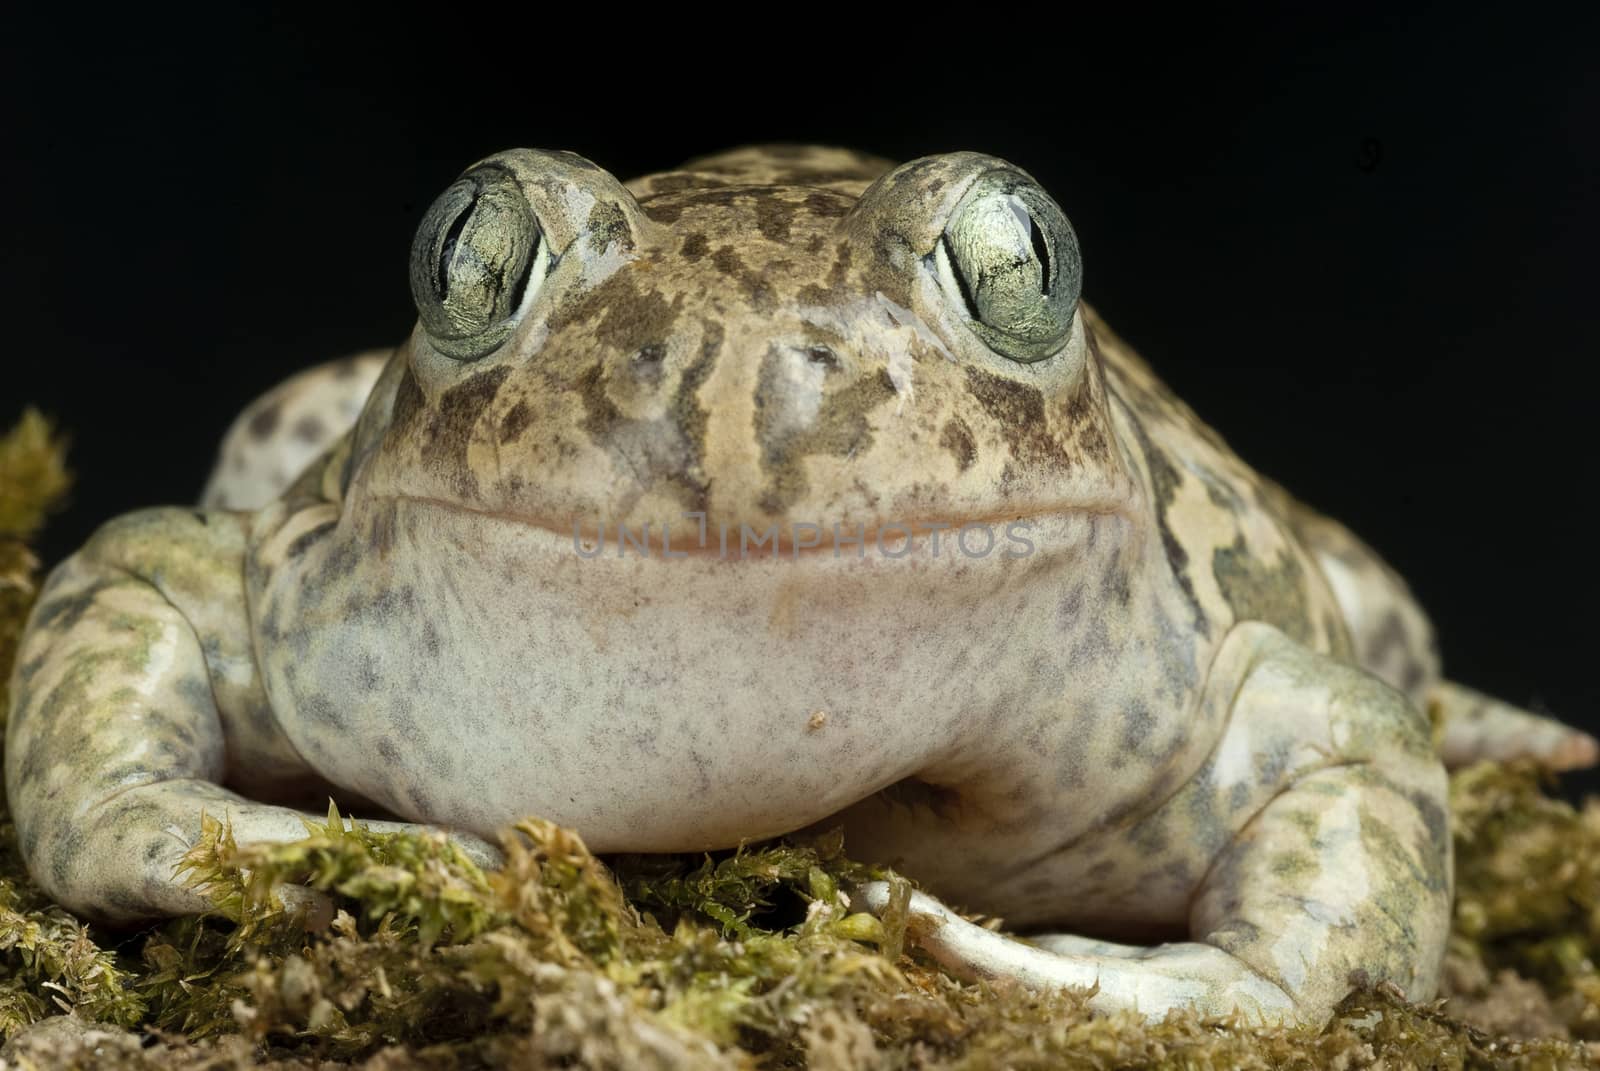 Spadefoot toad, Pelobates cultripes, amphibian by jalonsohu@gmail.com